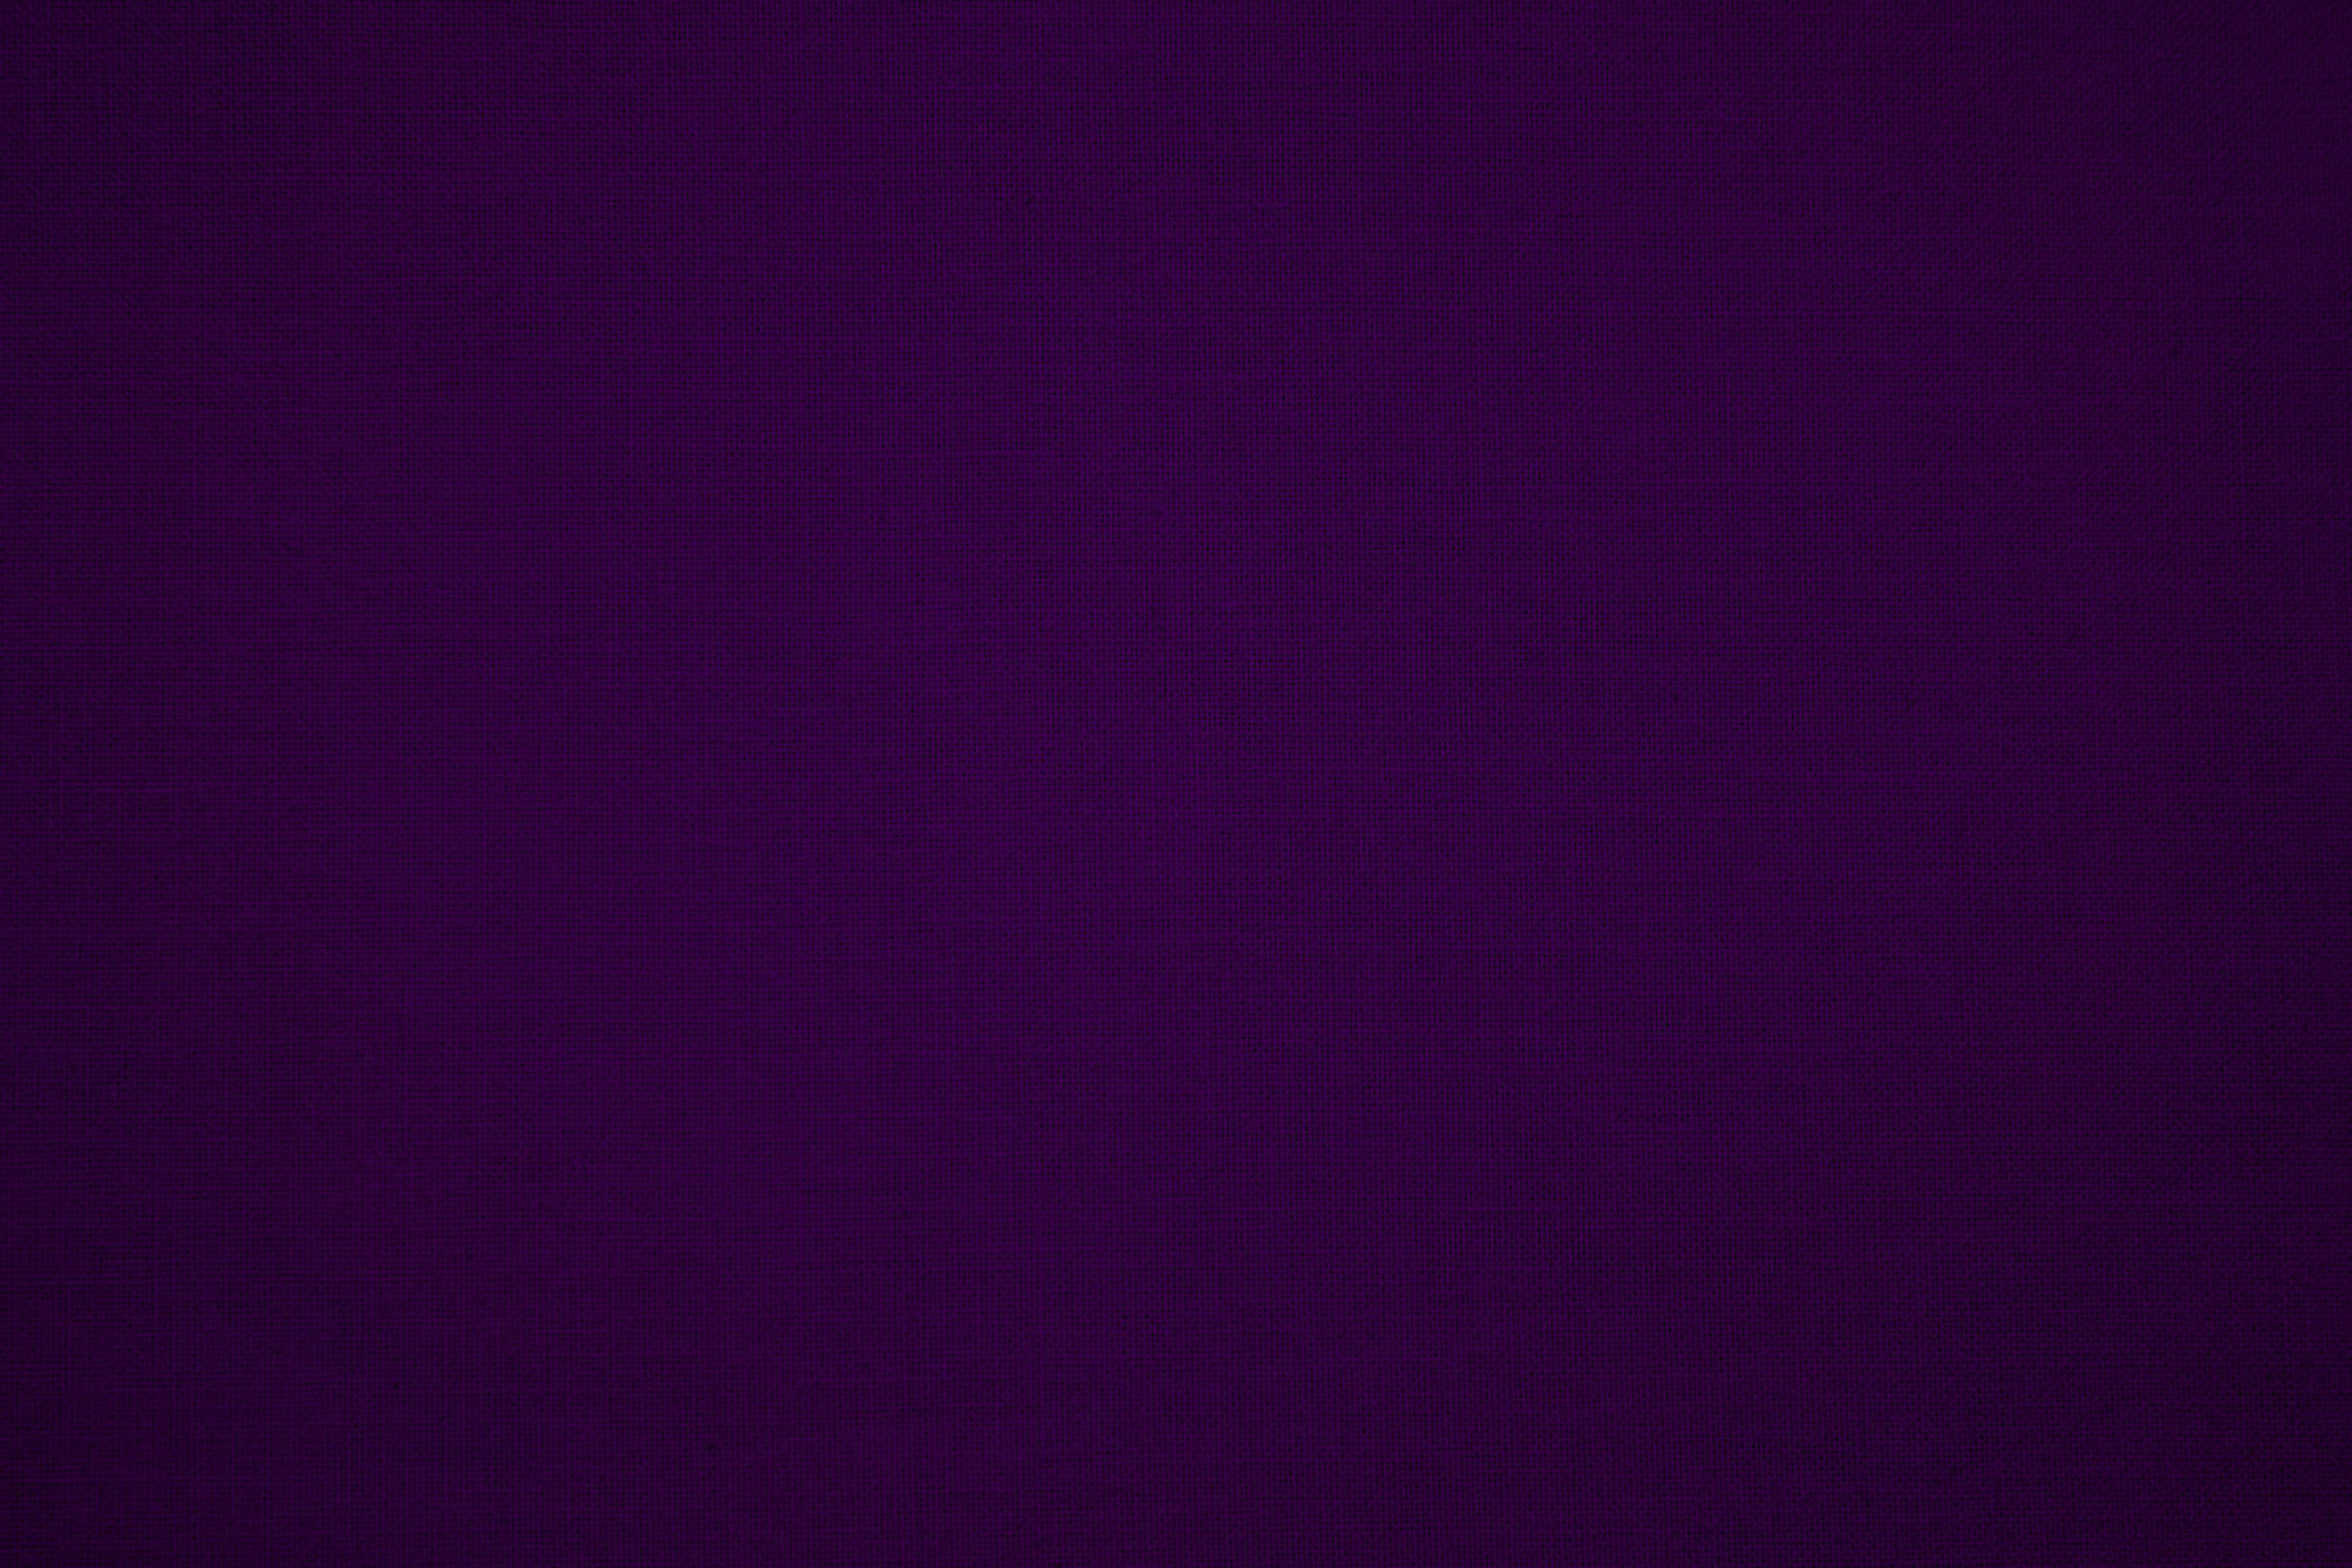 shades of dark purple